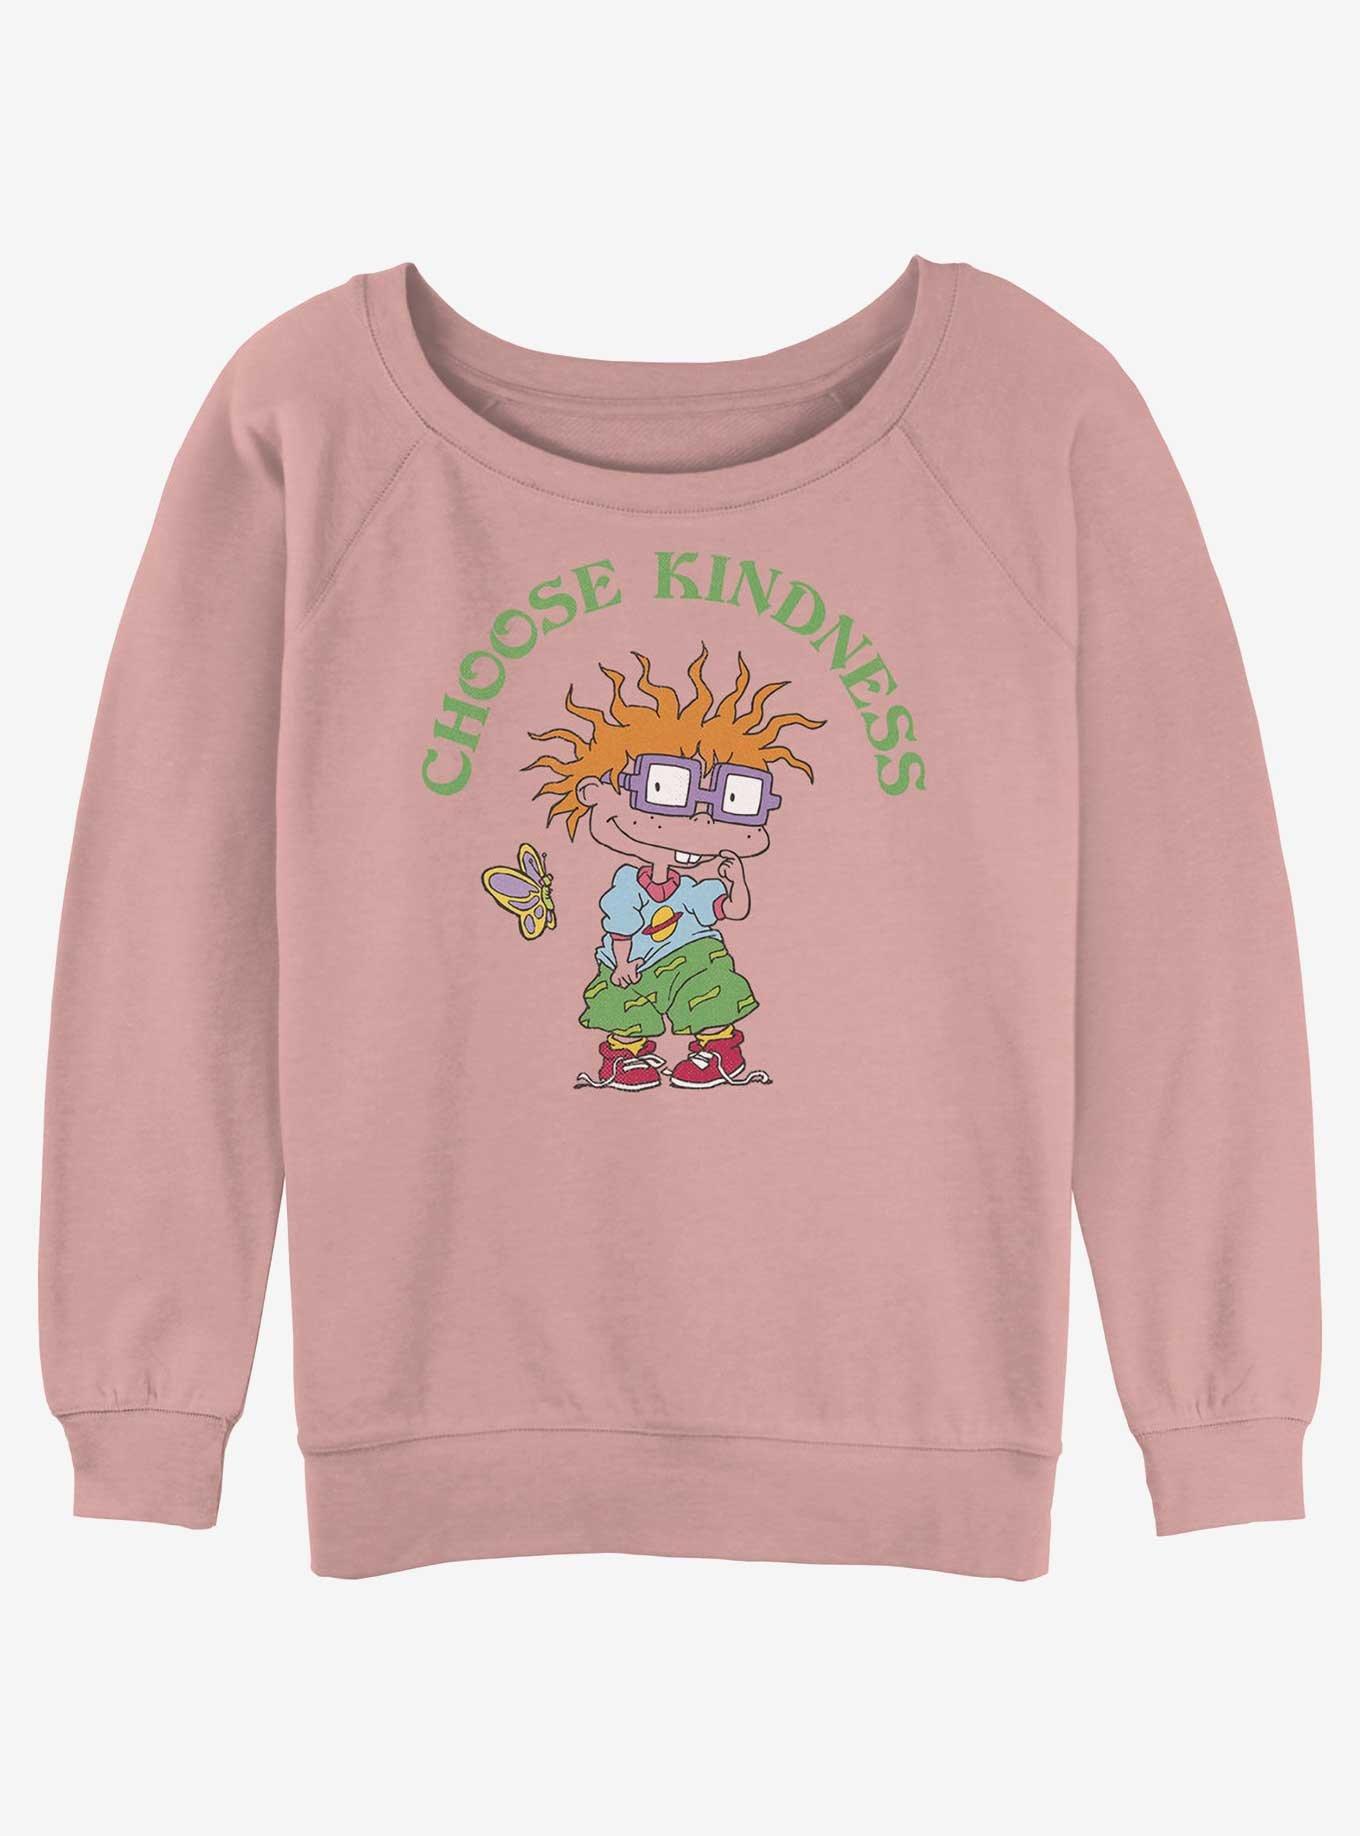 Rugrats Chuckie Choose Kindness Girls Slouchy Sweatshirt - PINK